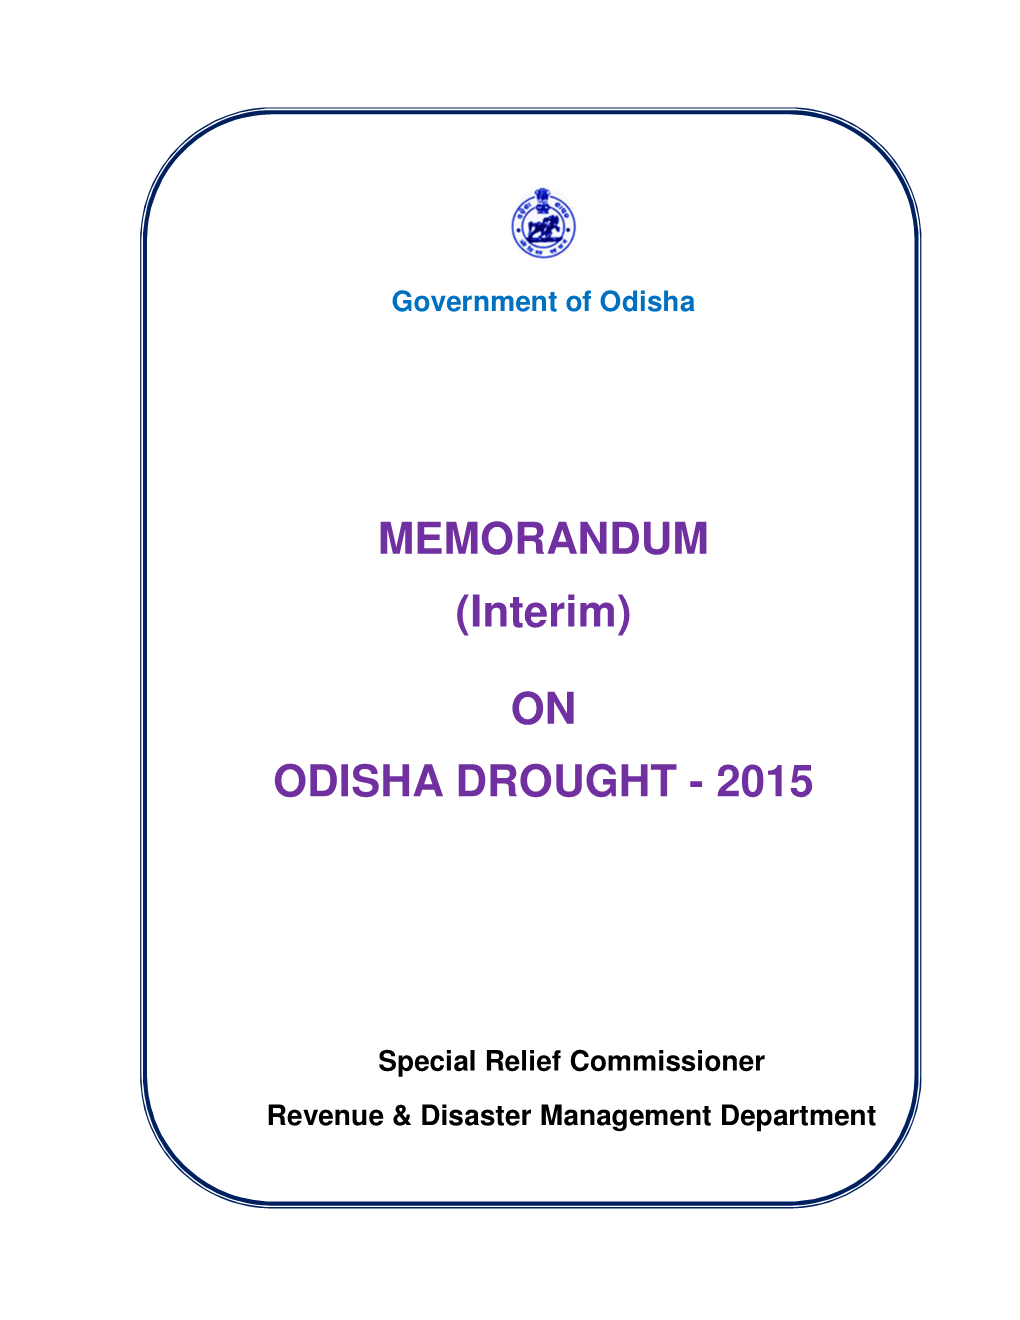 On Odisha Drought - 2015